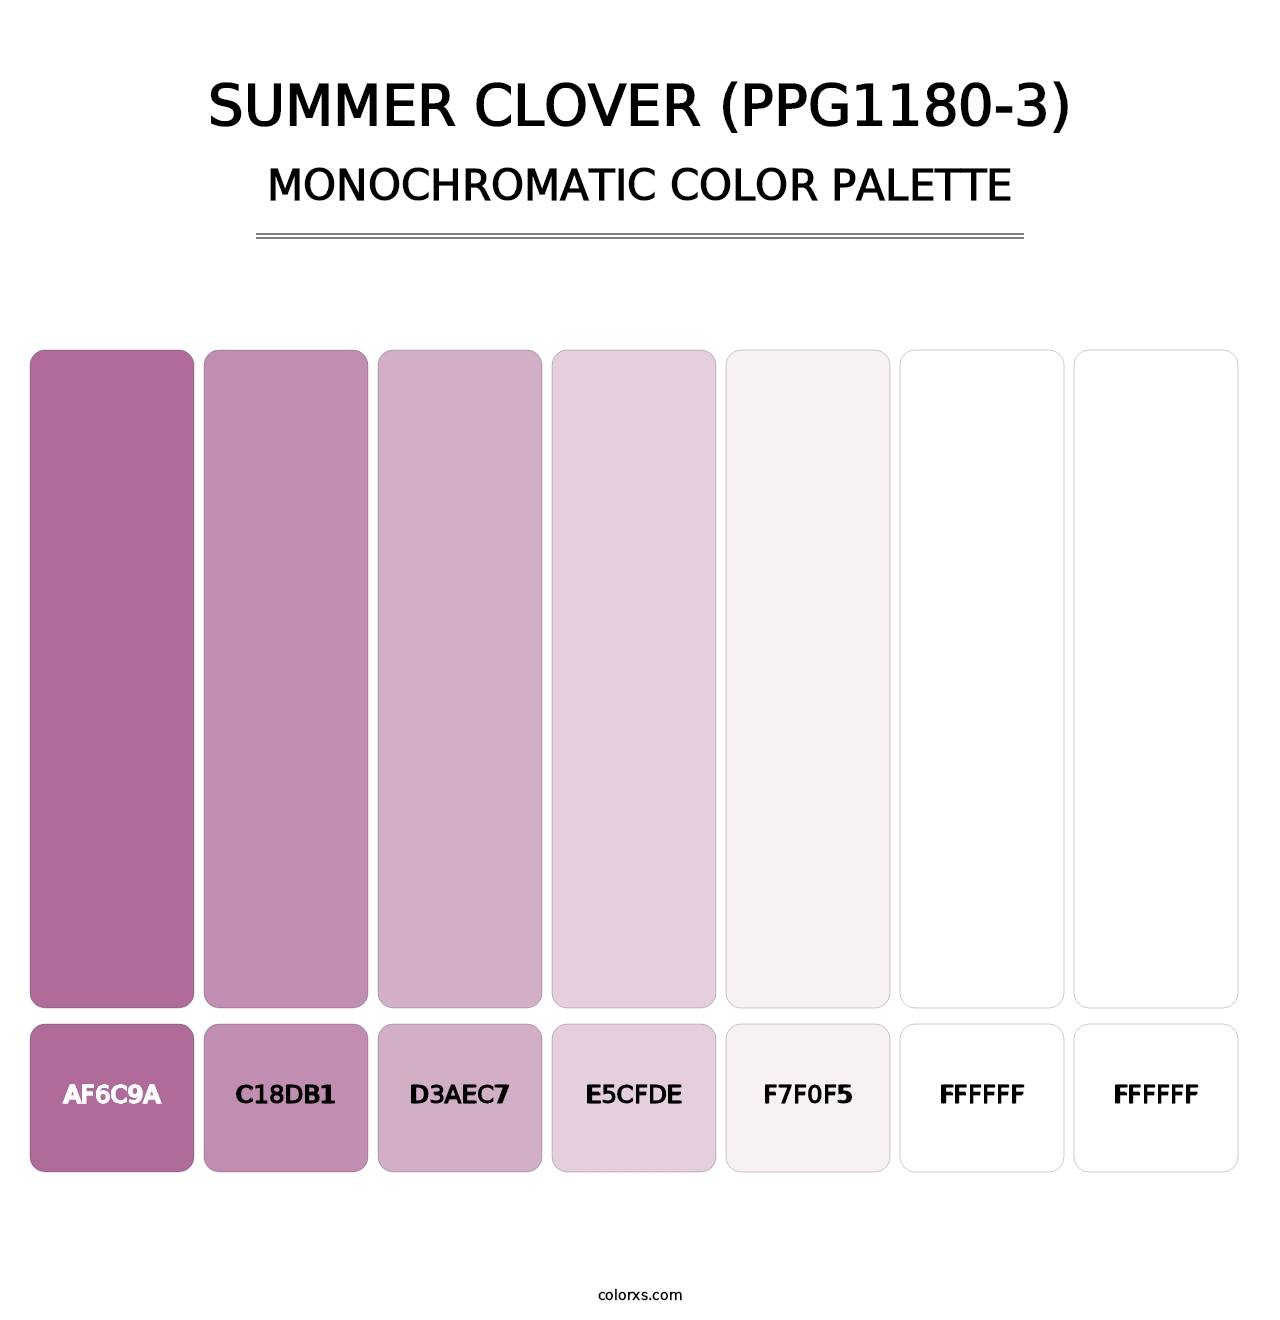 Summer Clover (PPG1180-3) - Monochromatic Color Palette